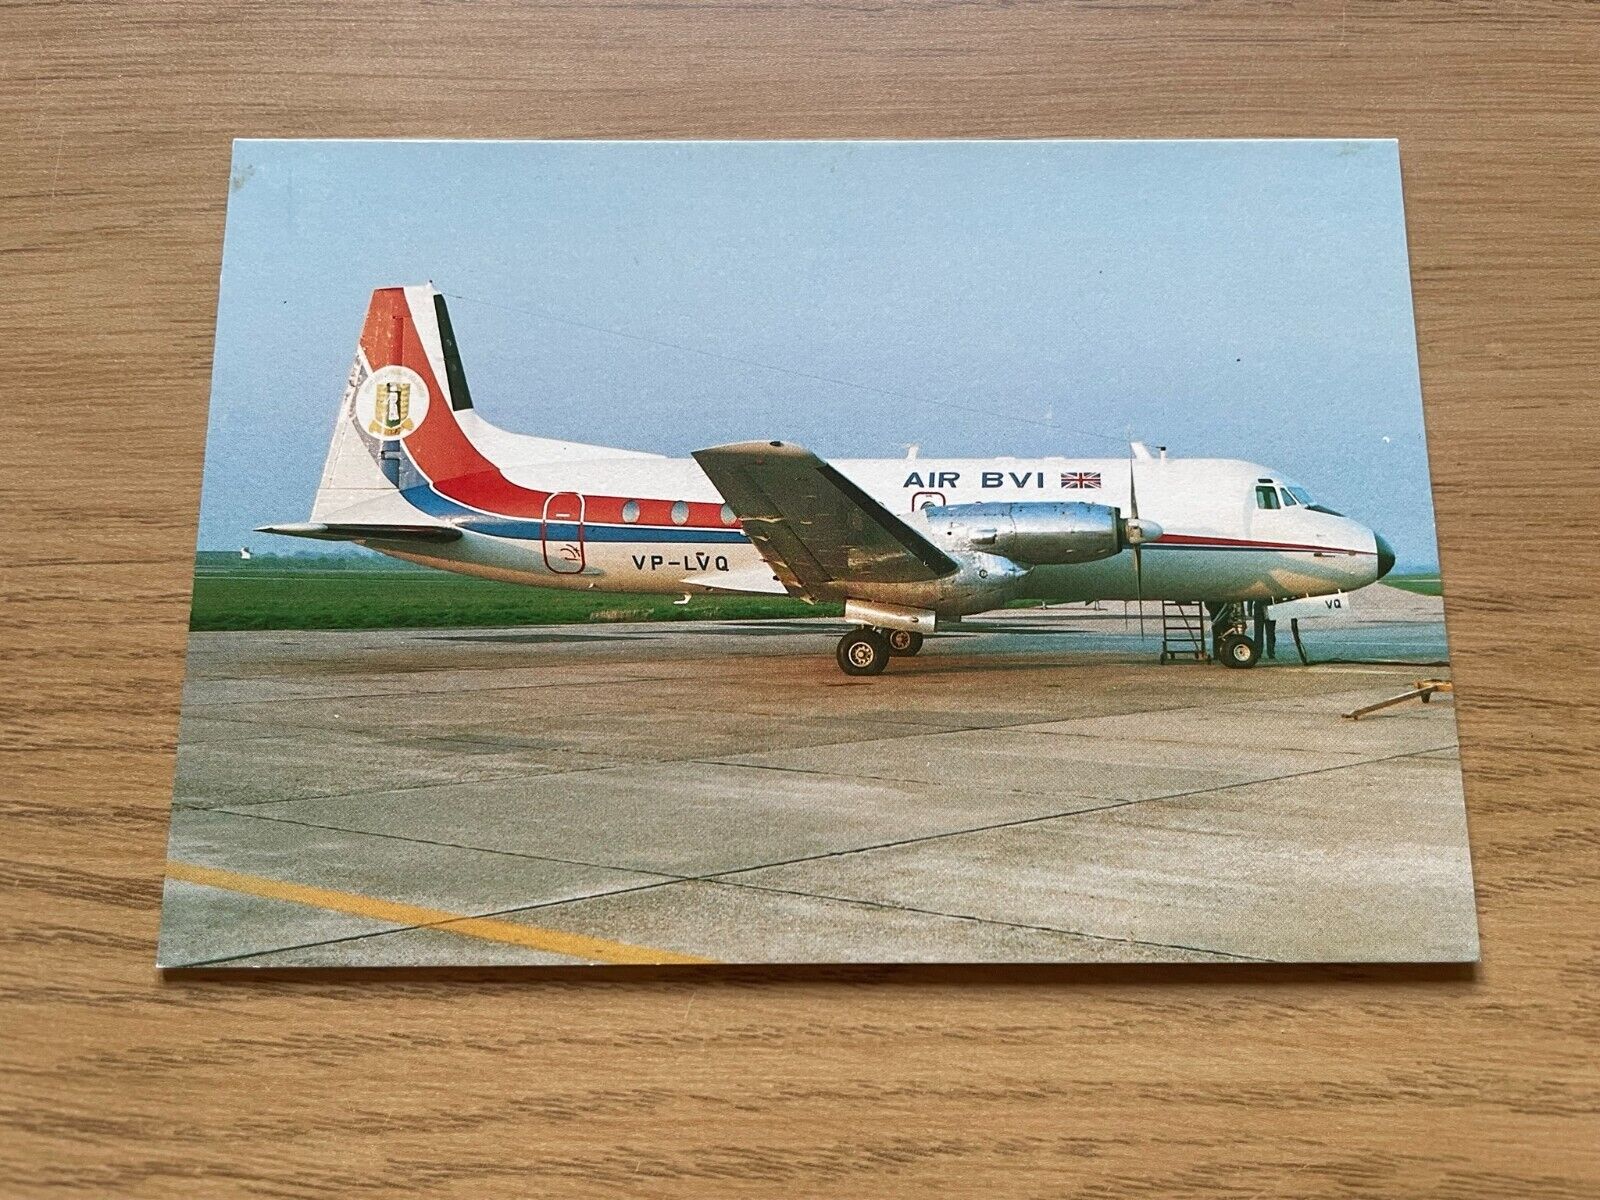 Air BVI Hawker Siddeley HS748 aircraft postcard